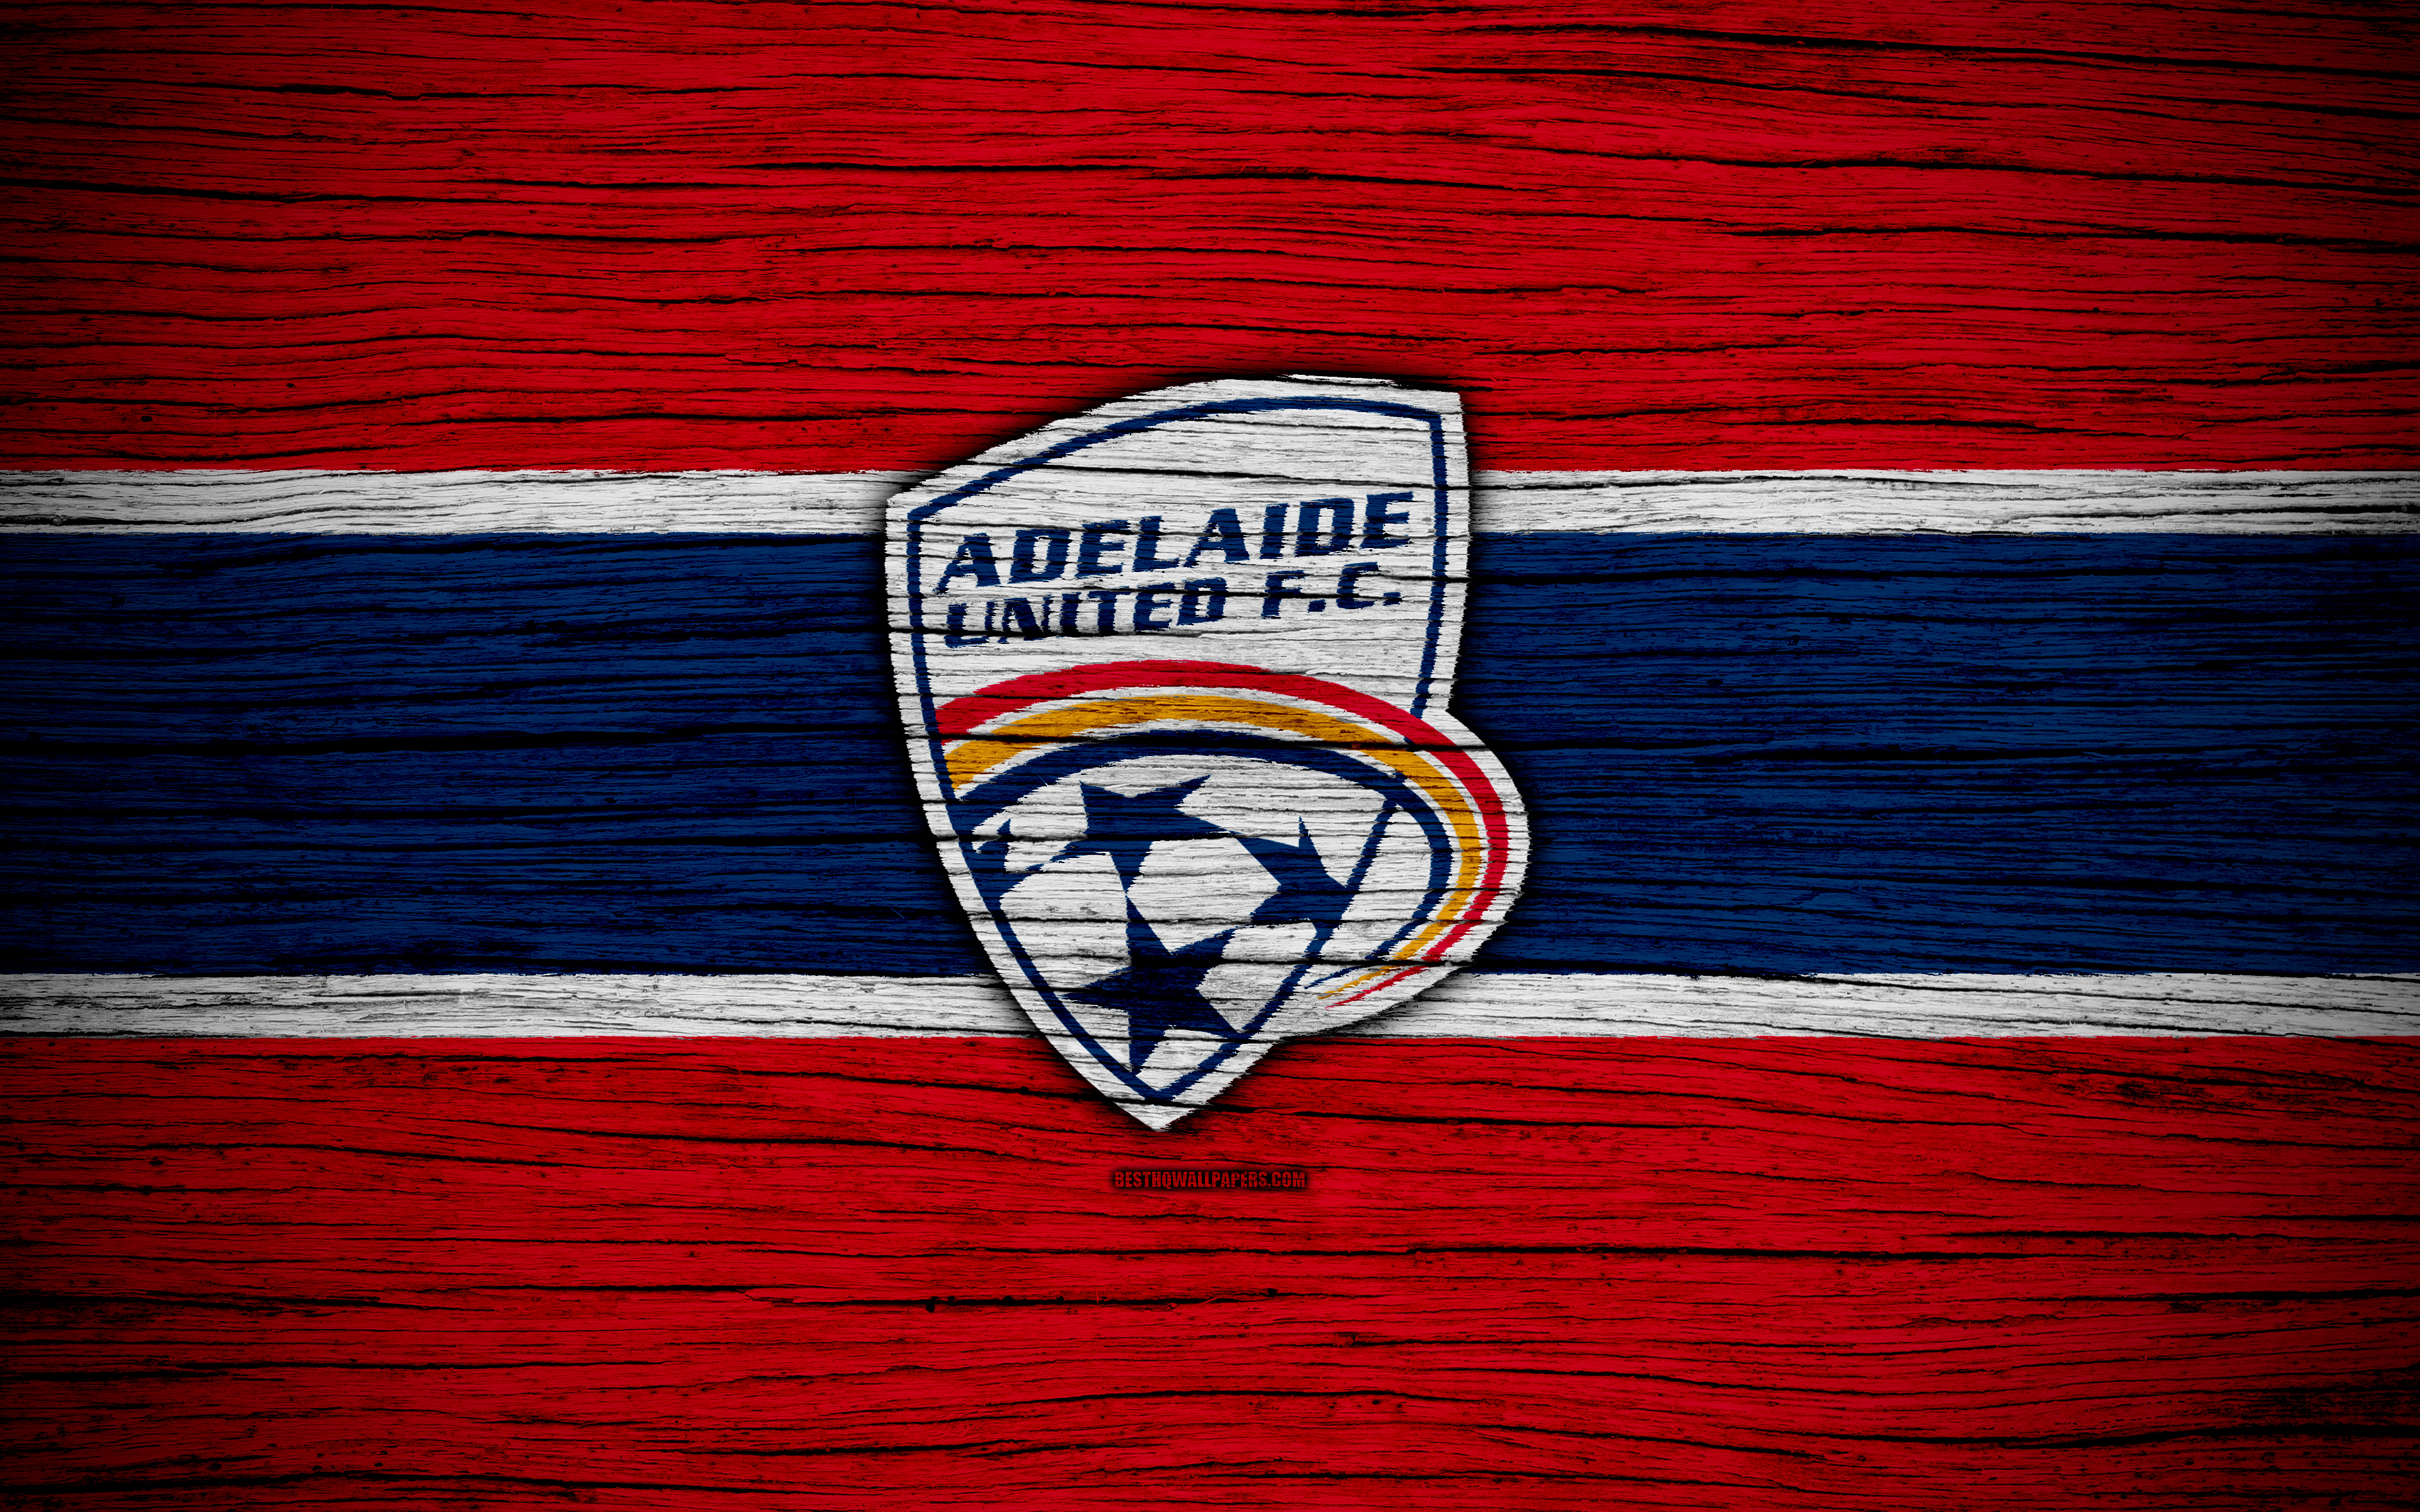 Adelaide United FC 4k Ultra HD Wallpaper